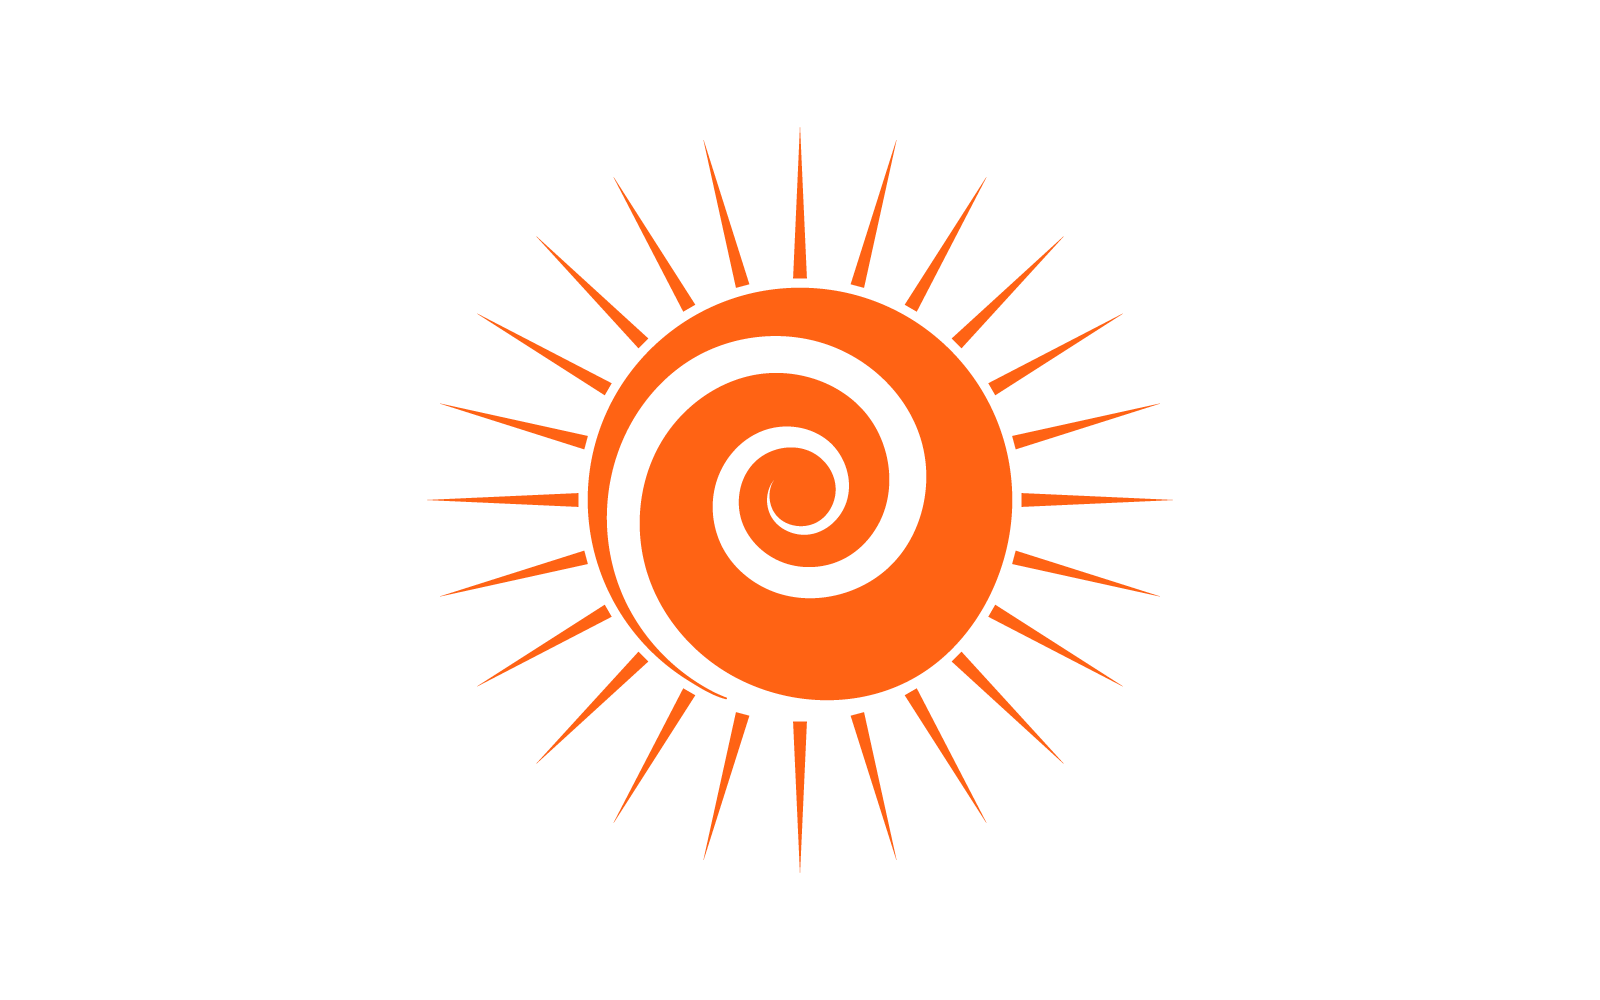 Sun illustration logo vector flat design template